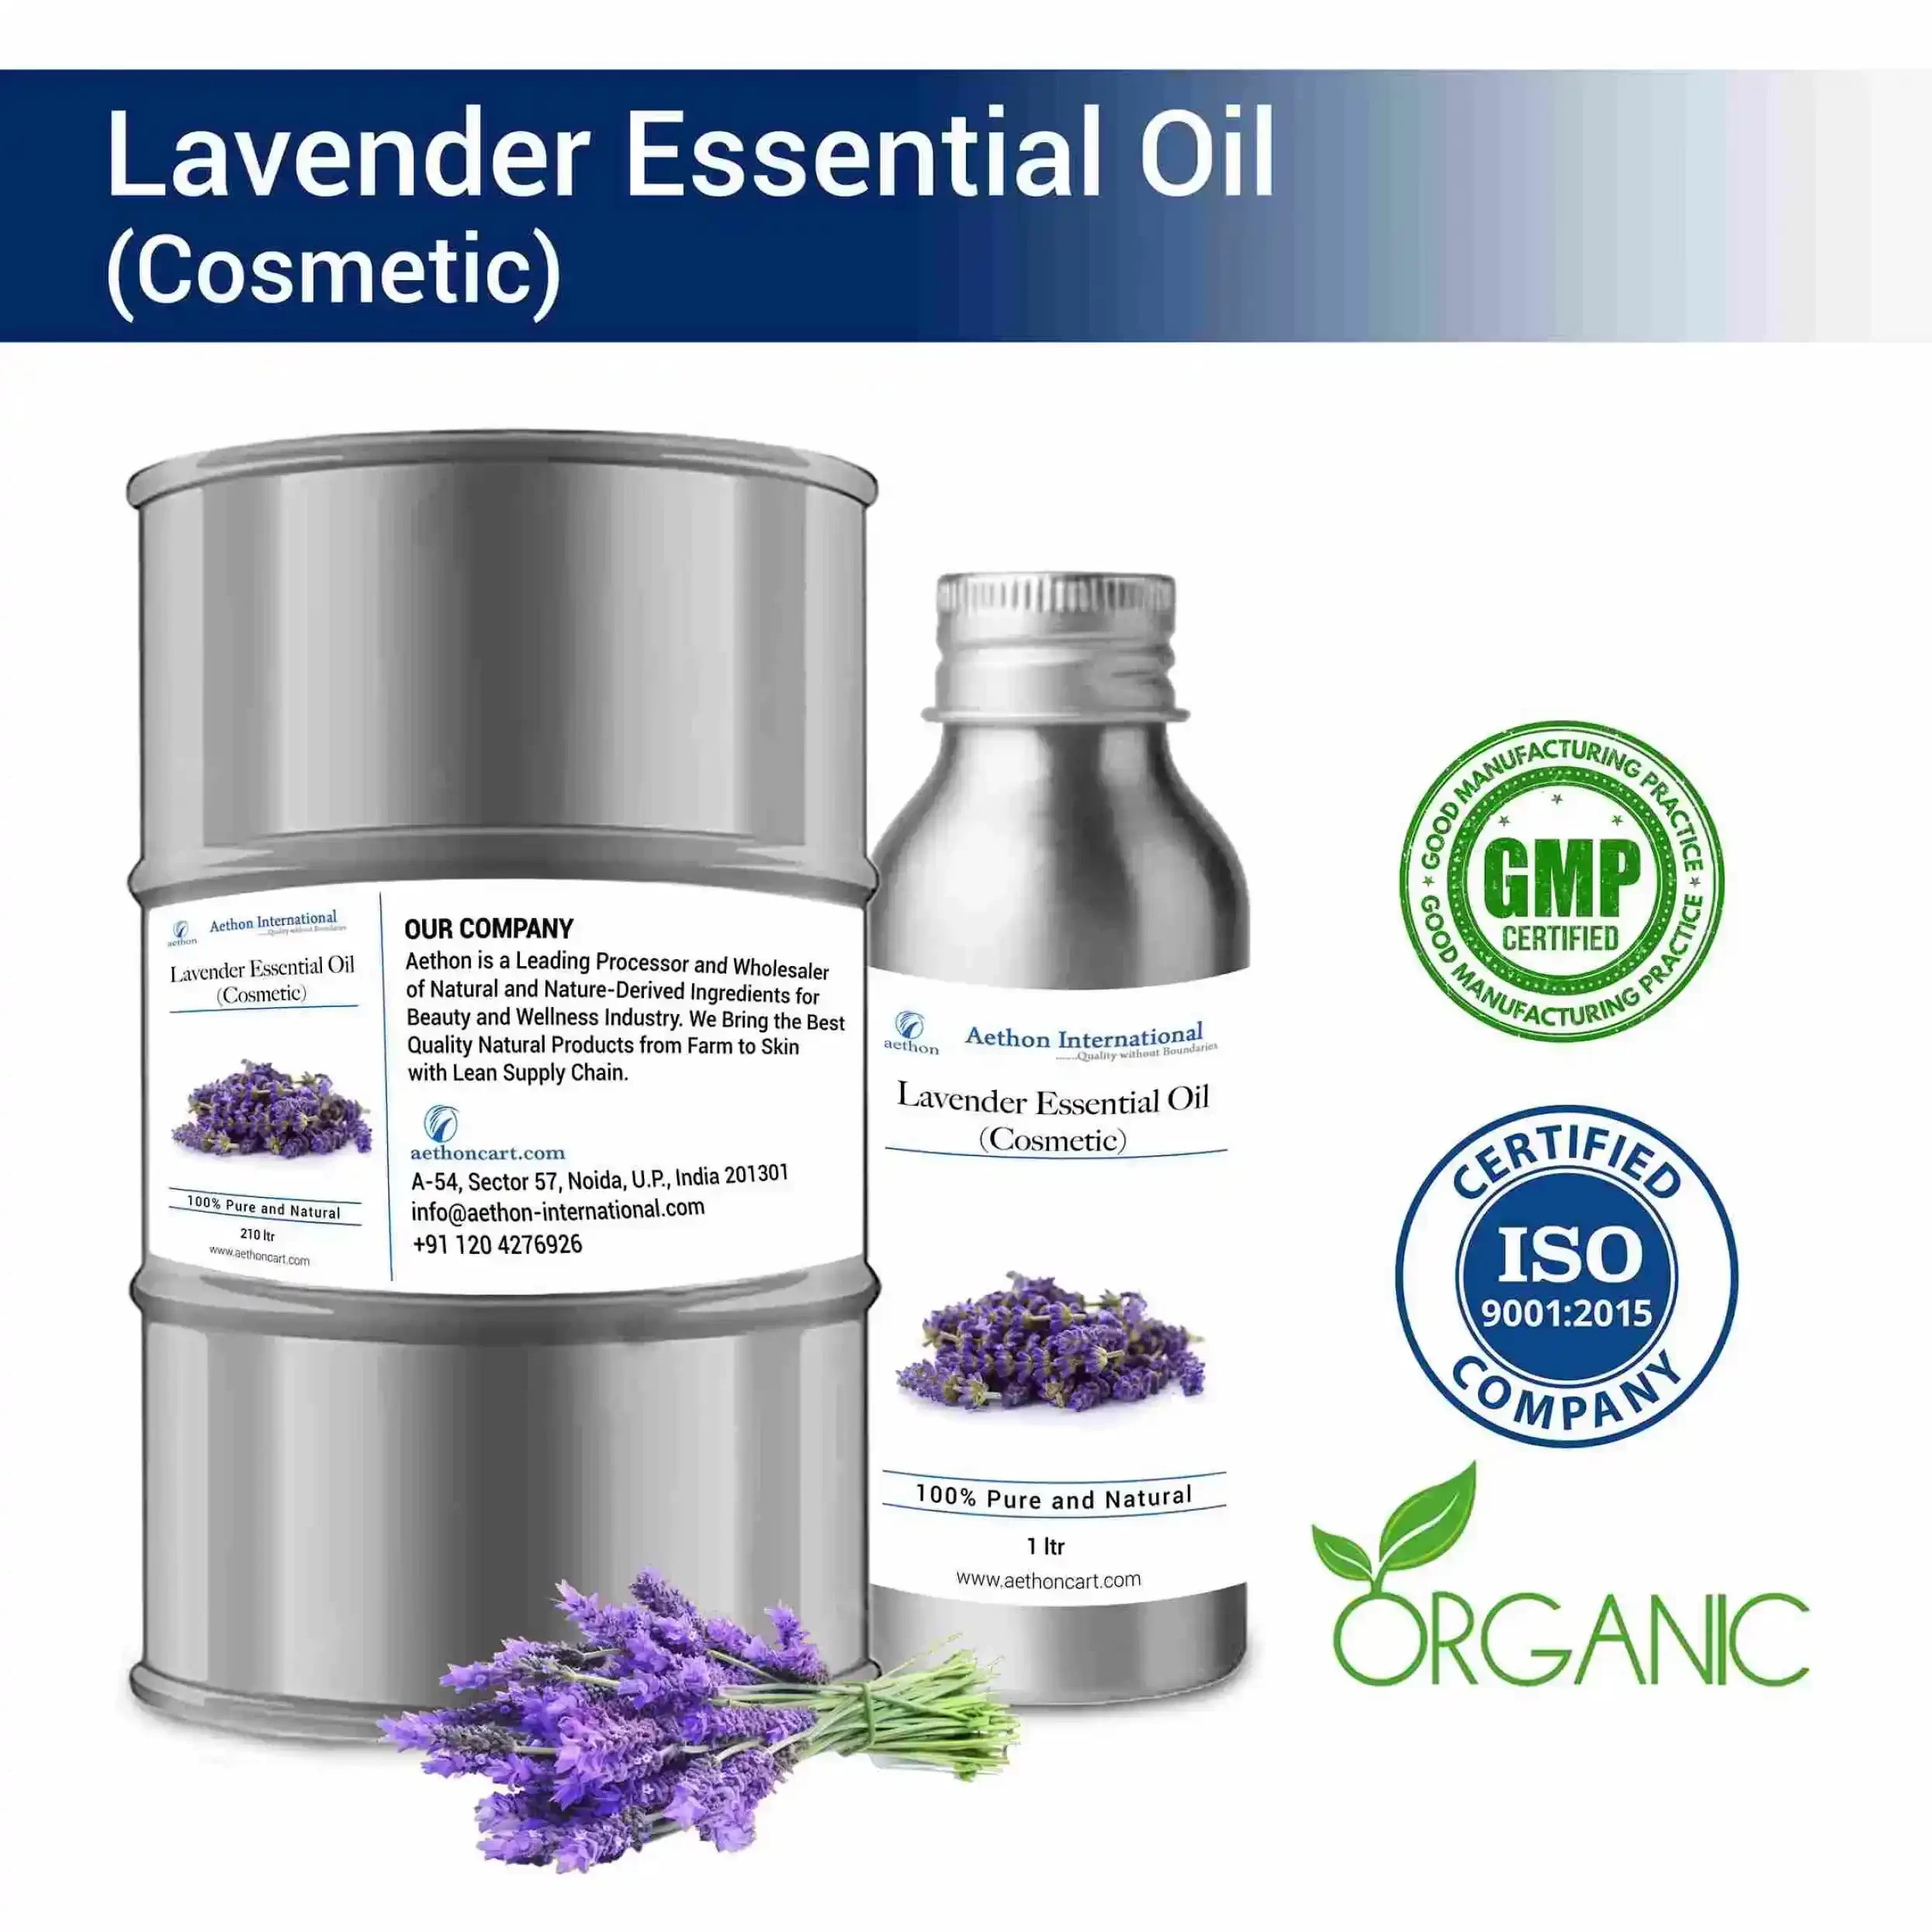 Lavender Essential Oil (Cosmetic)